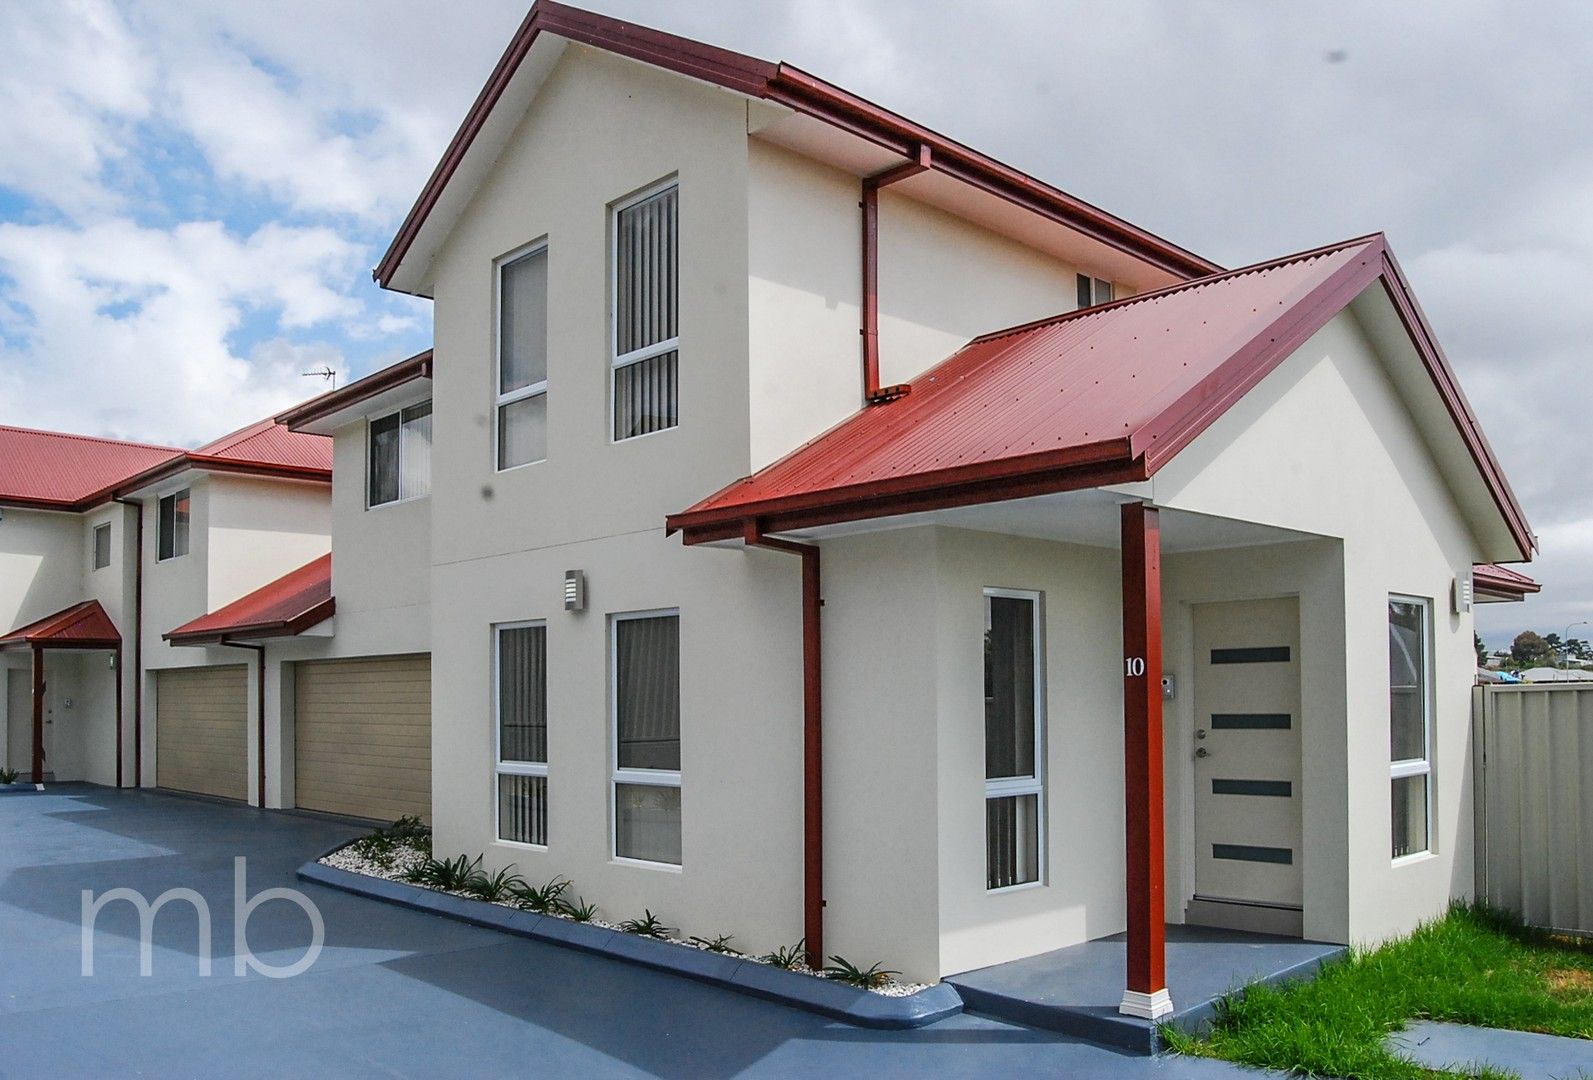 4 bedrooms Townhouse in 10/19 Moonstone Drive ORANGE NSW, 2800